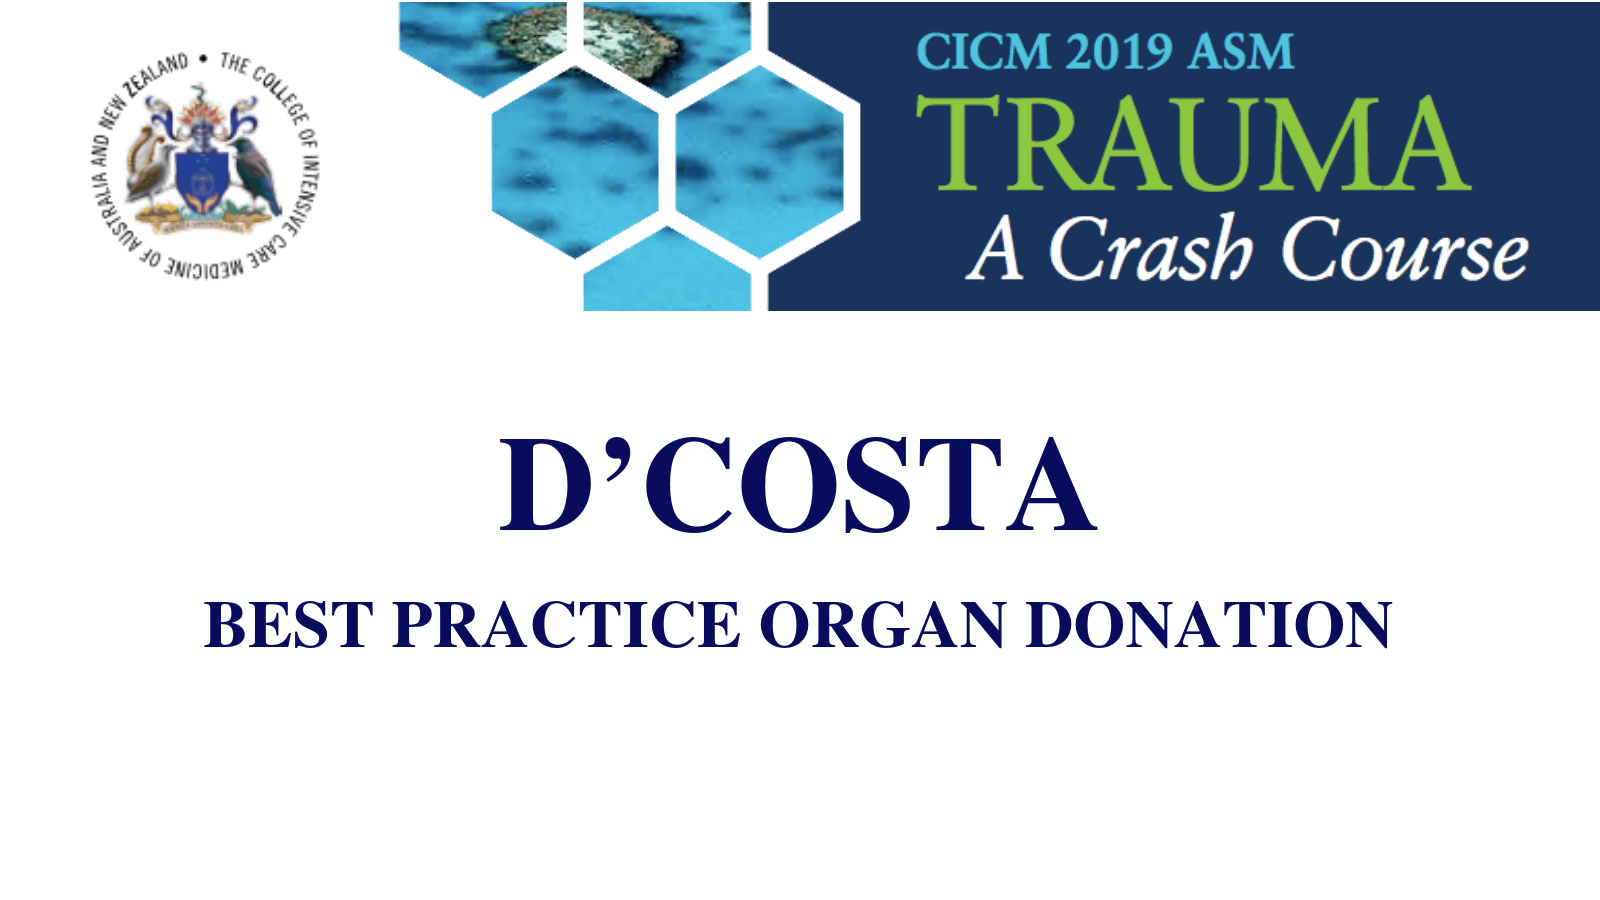 Best practice organ donation